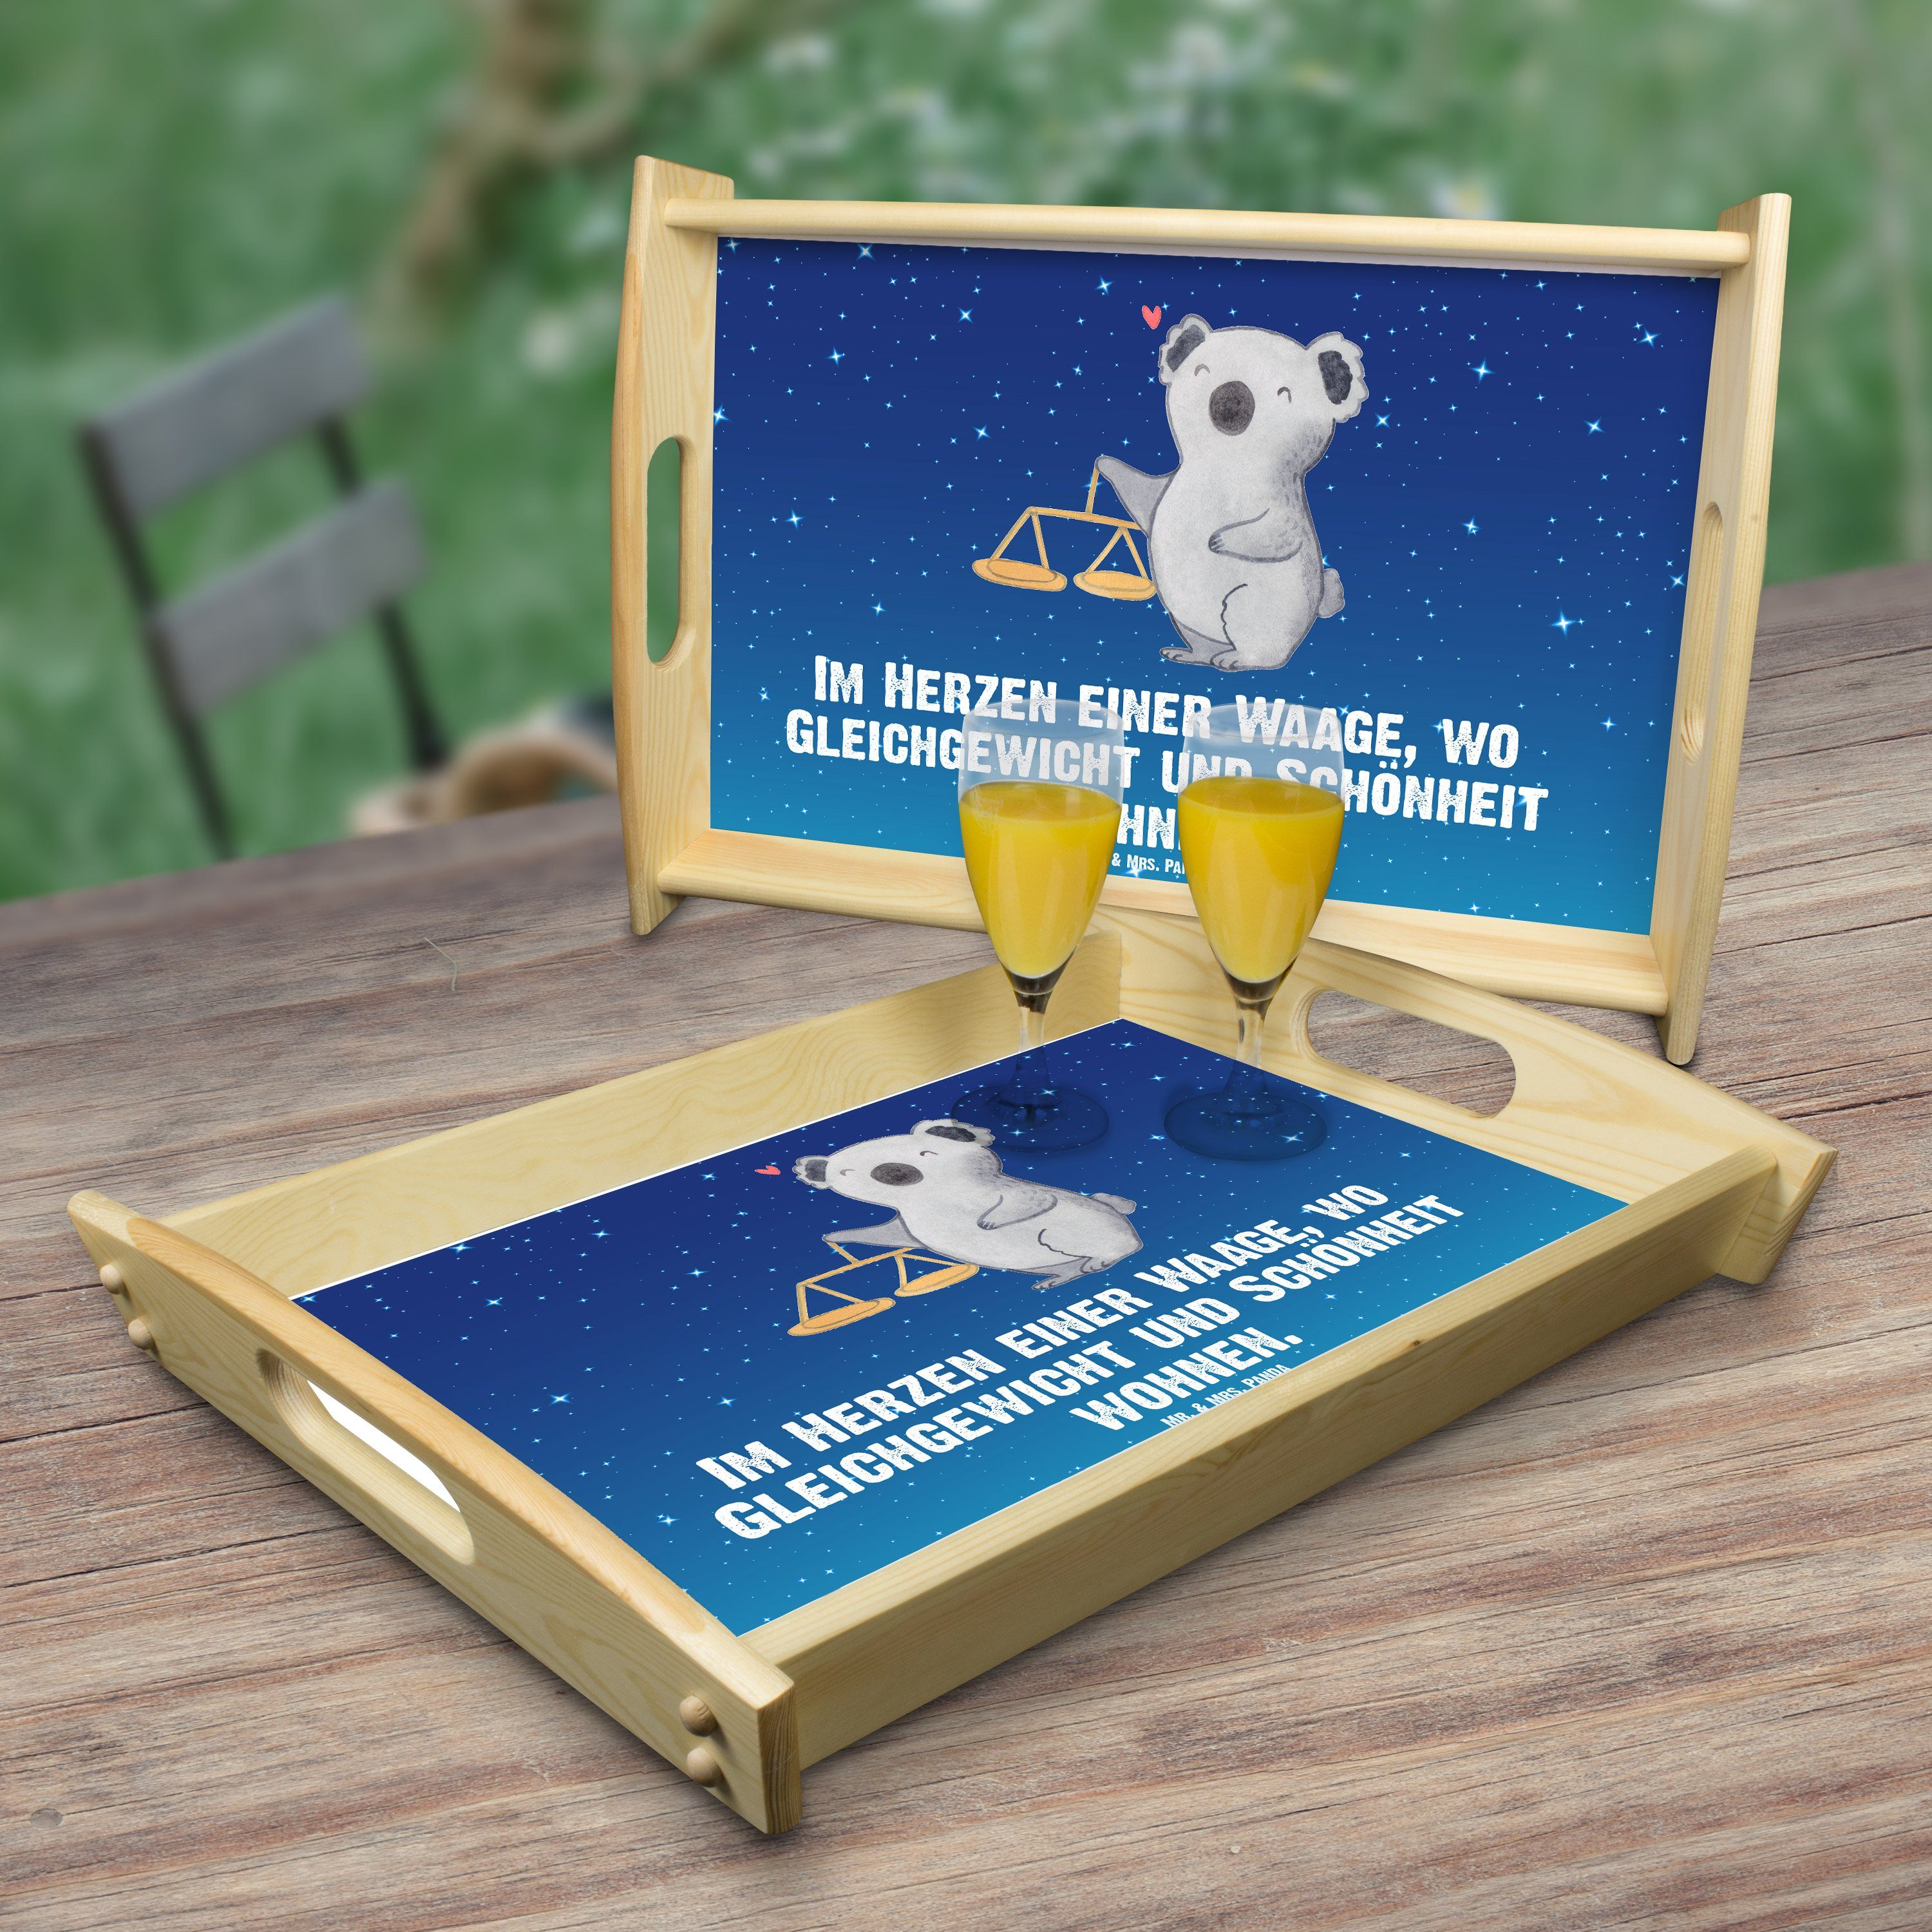 Mr. & Mrs. Panda Tablett Waage Astrologie - Sternenhimmel Blau - Geschenk, Aszendent, Holztabl, Echtholz lasiert, (1-tlg)